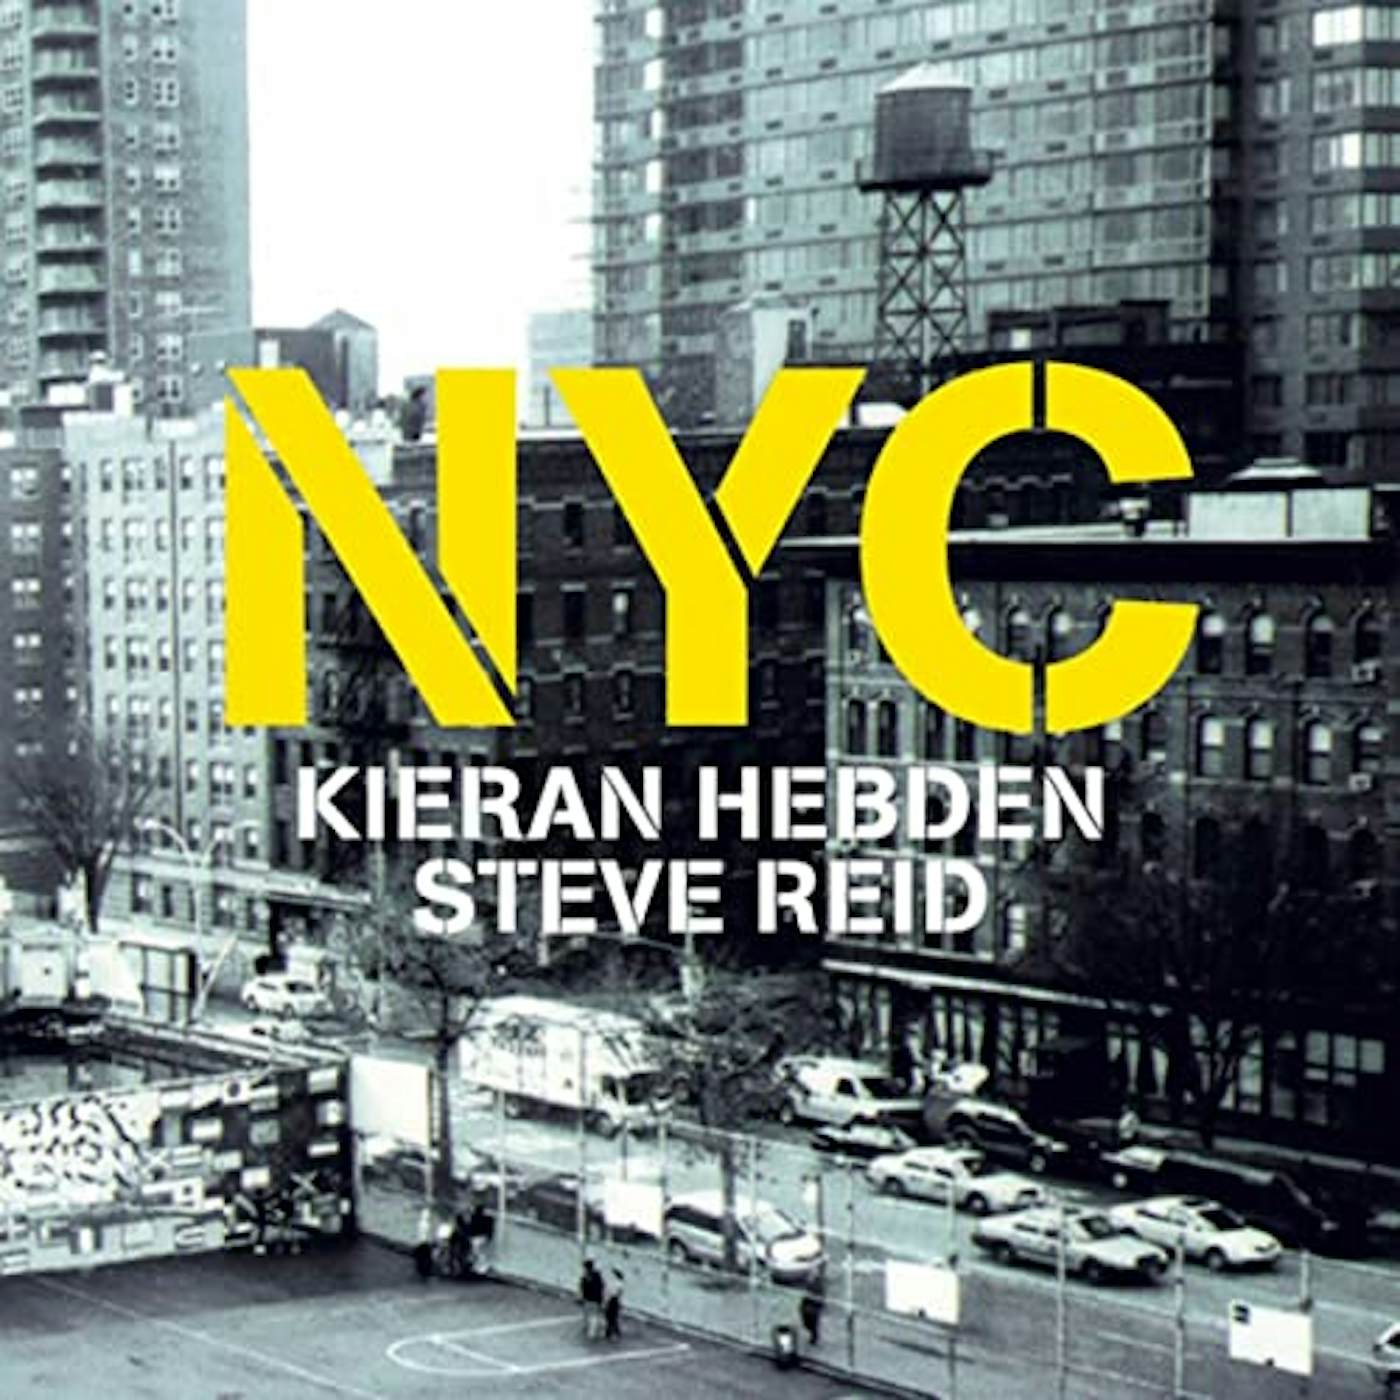 Kieran Hebden & Steve Reid NYC (UK) (Vinyl)